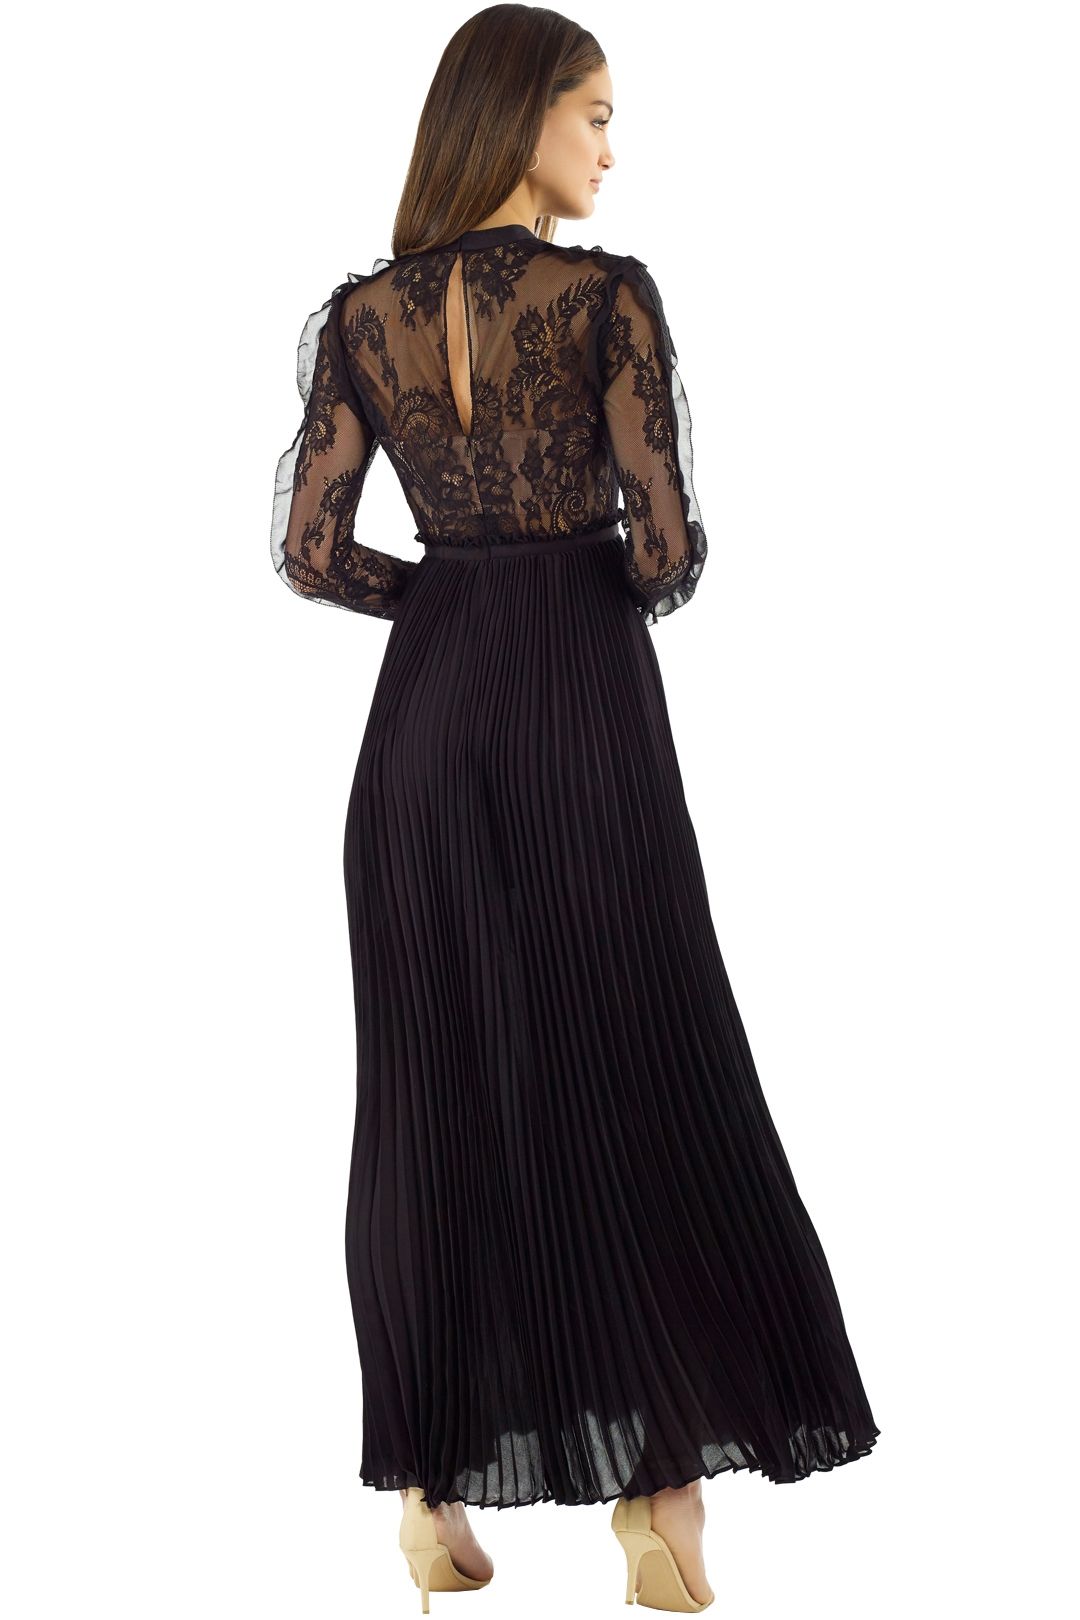 Self Portrait - Moni Lace Pleated Dress - Black - Back